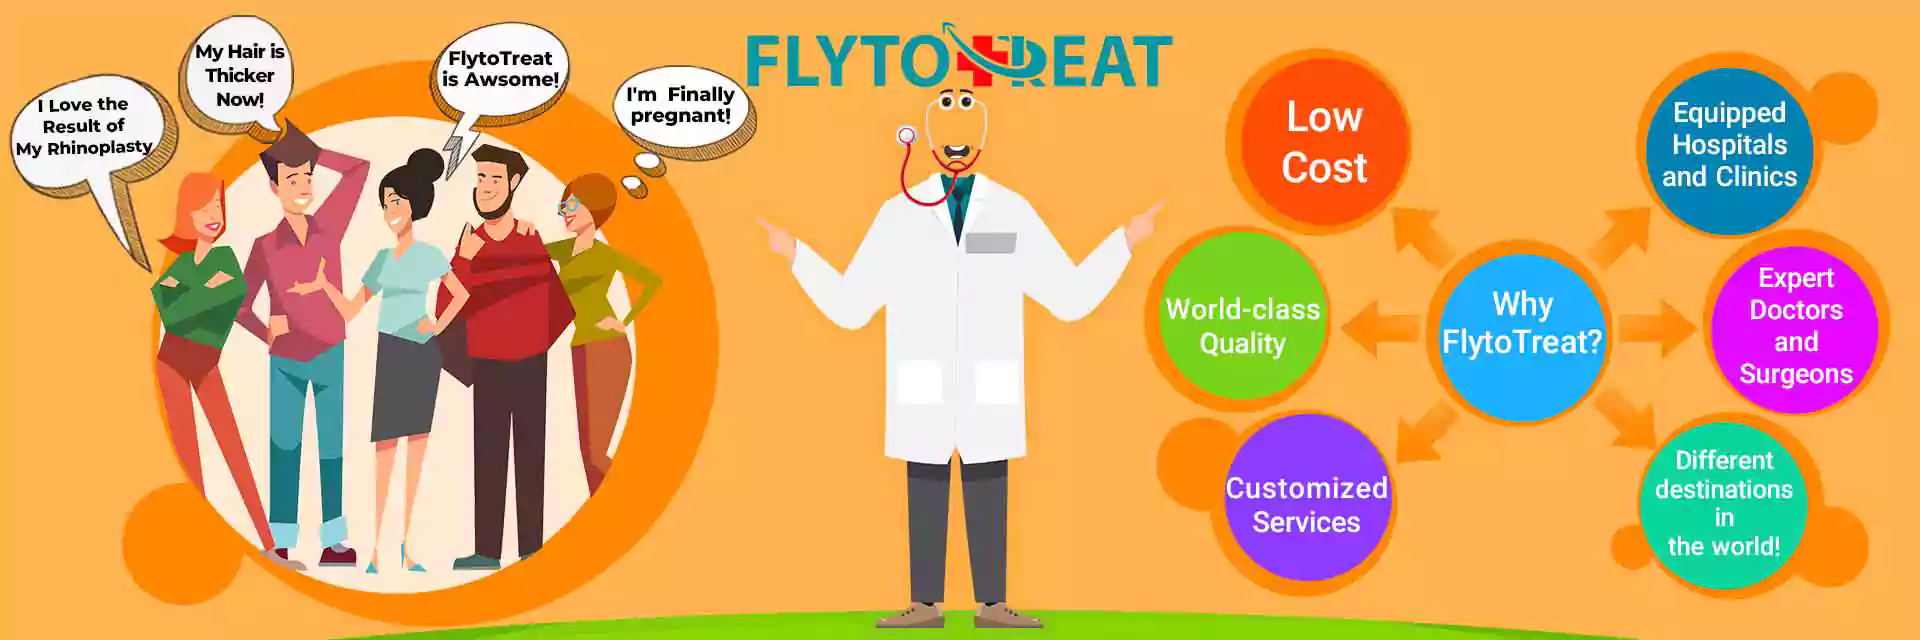 patients' experiences with flytotreat